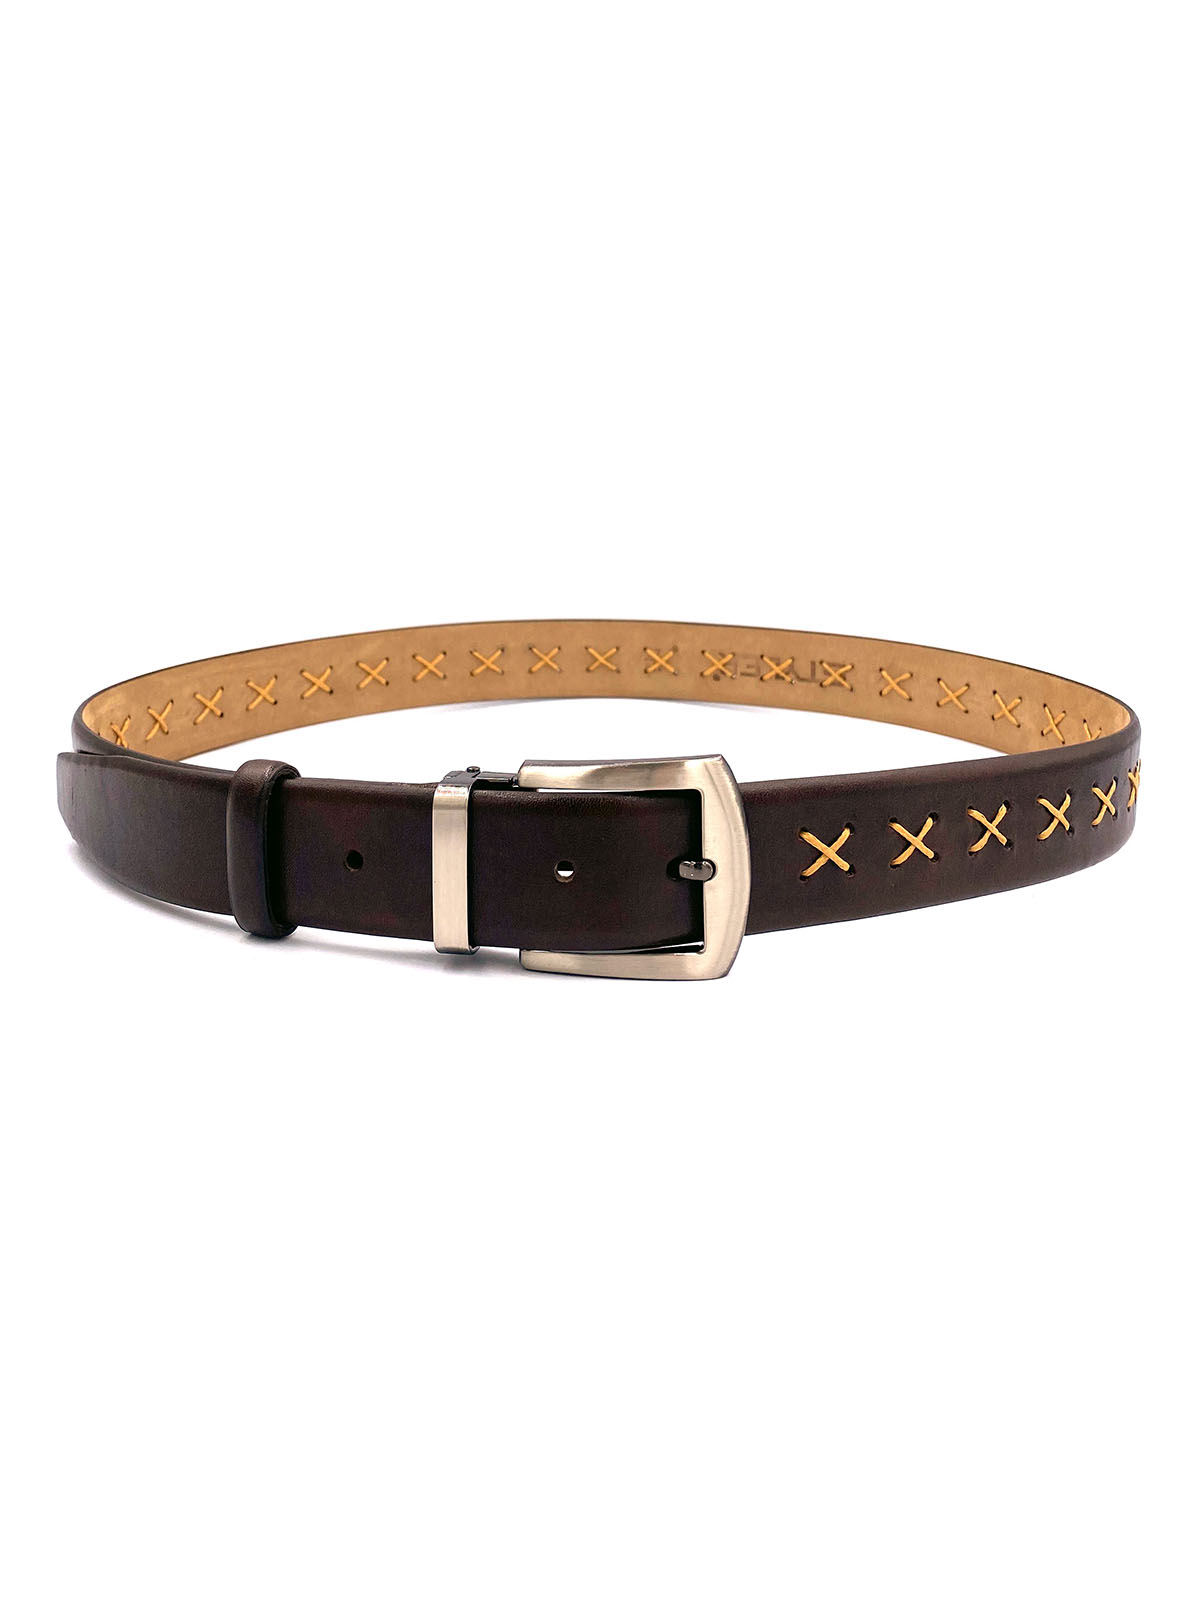 Belt in dark brown with decoration - 10414 - € 10.12 img2